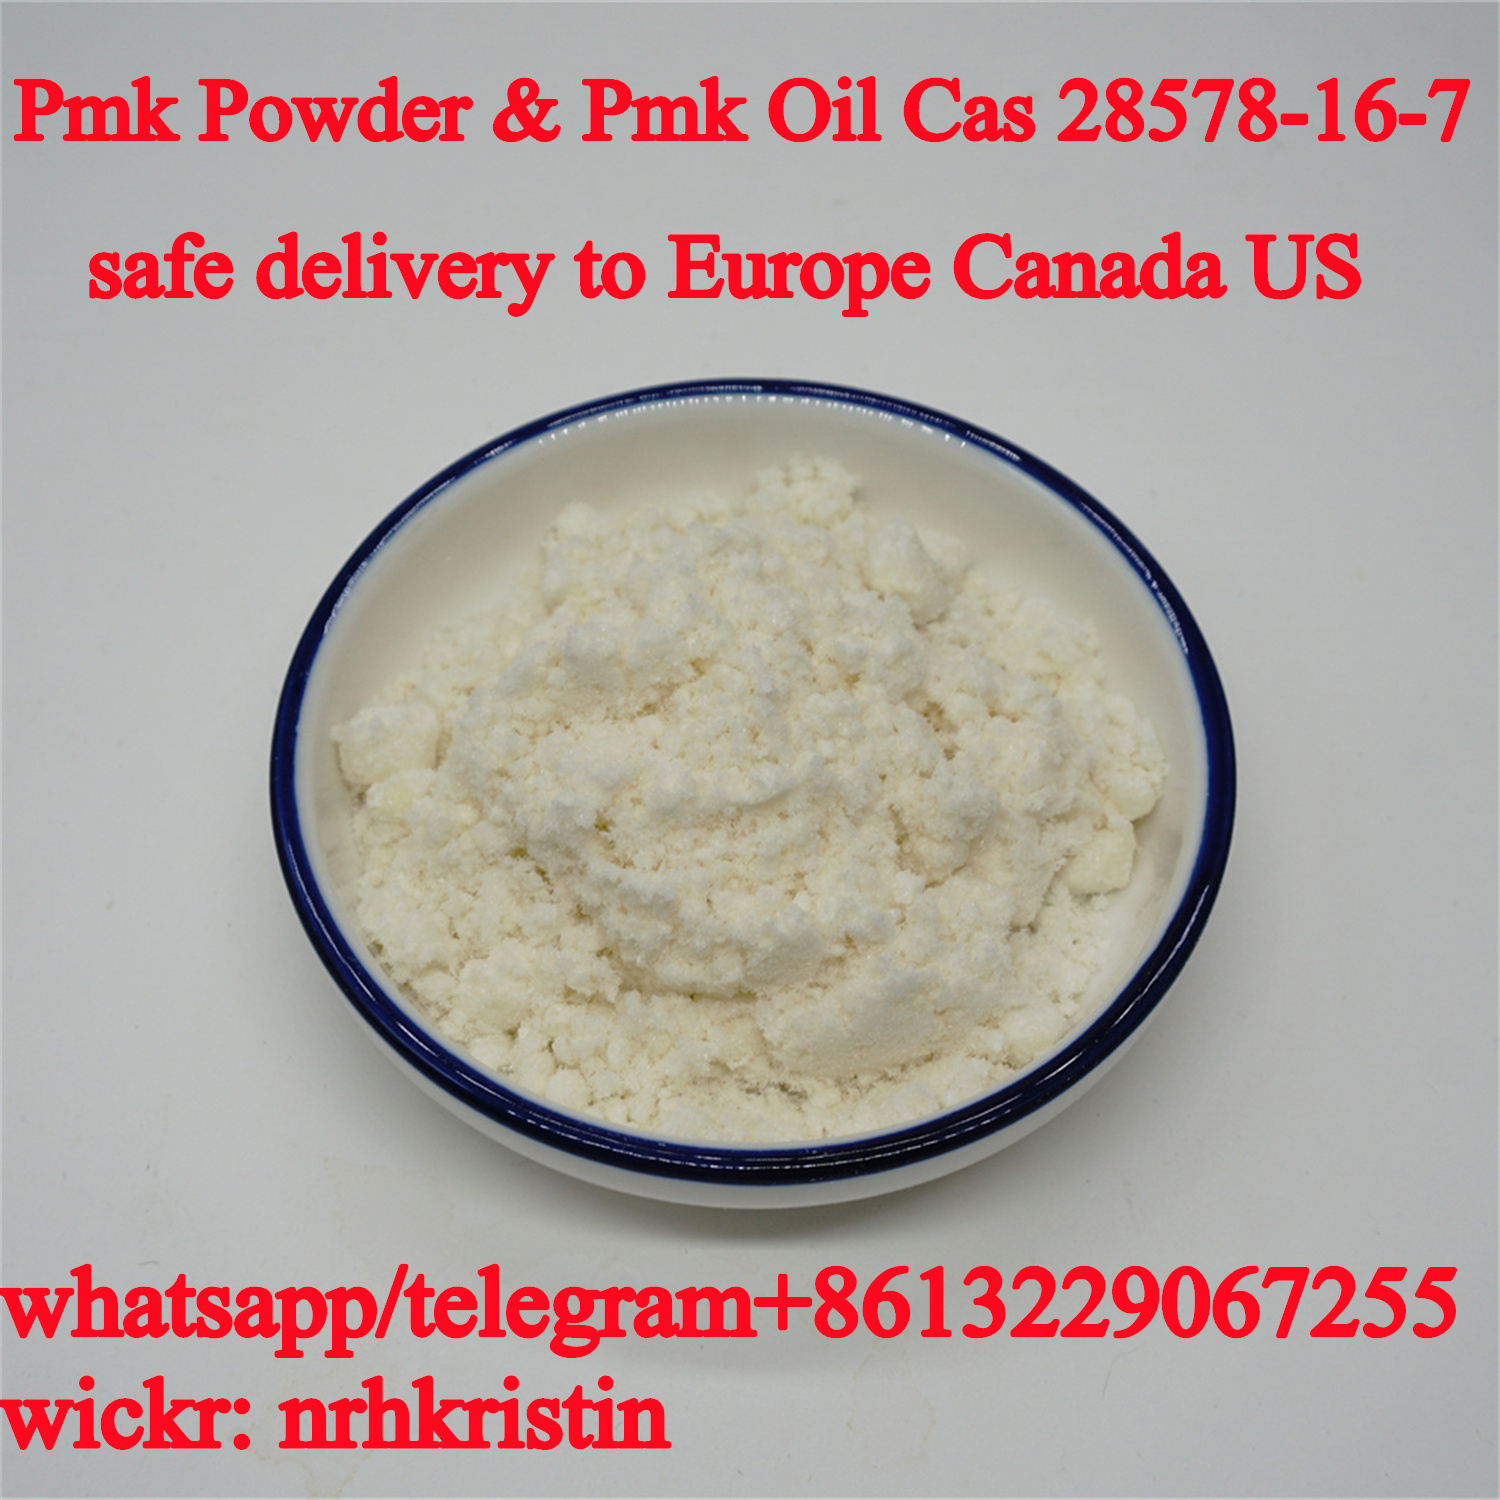 Europe Canada door to door safe arrival white / light yellow pmk powder pmk oil  - photo